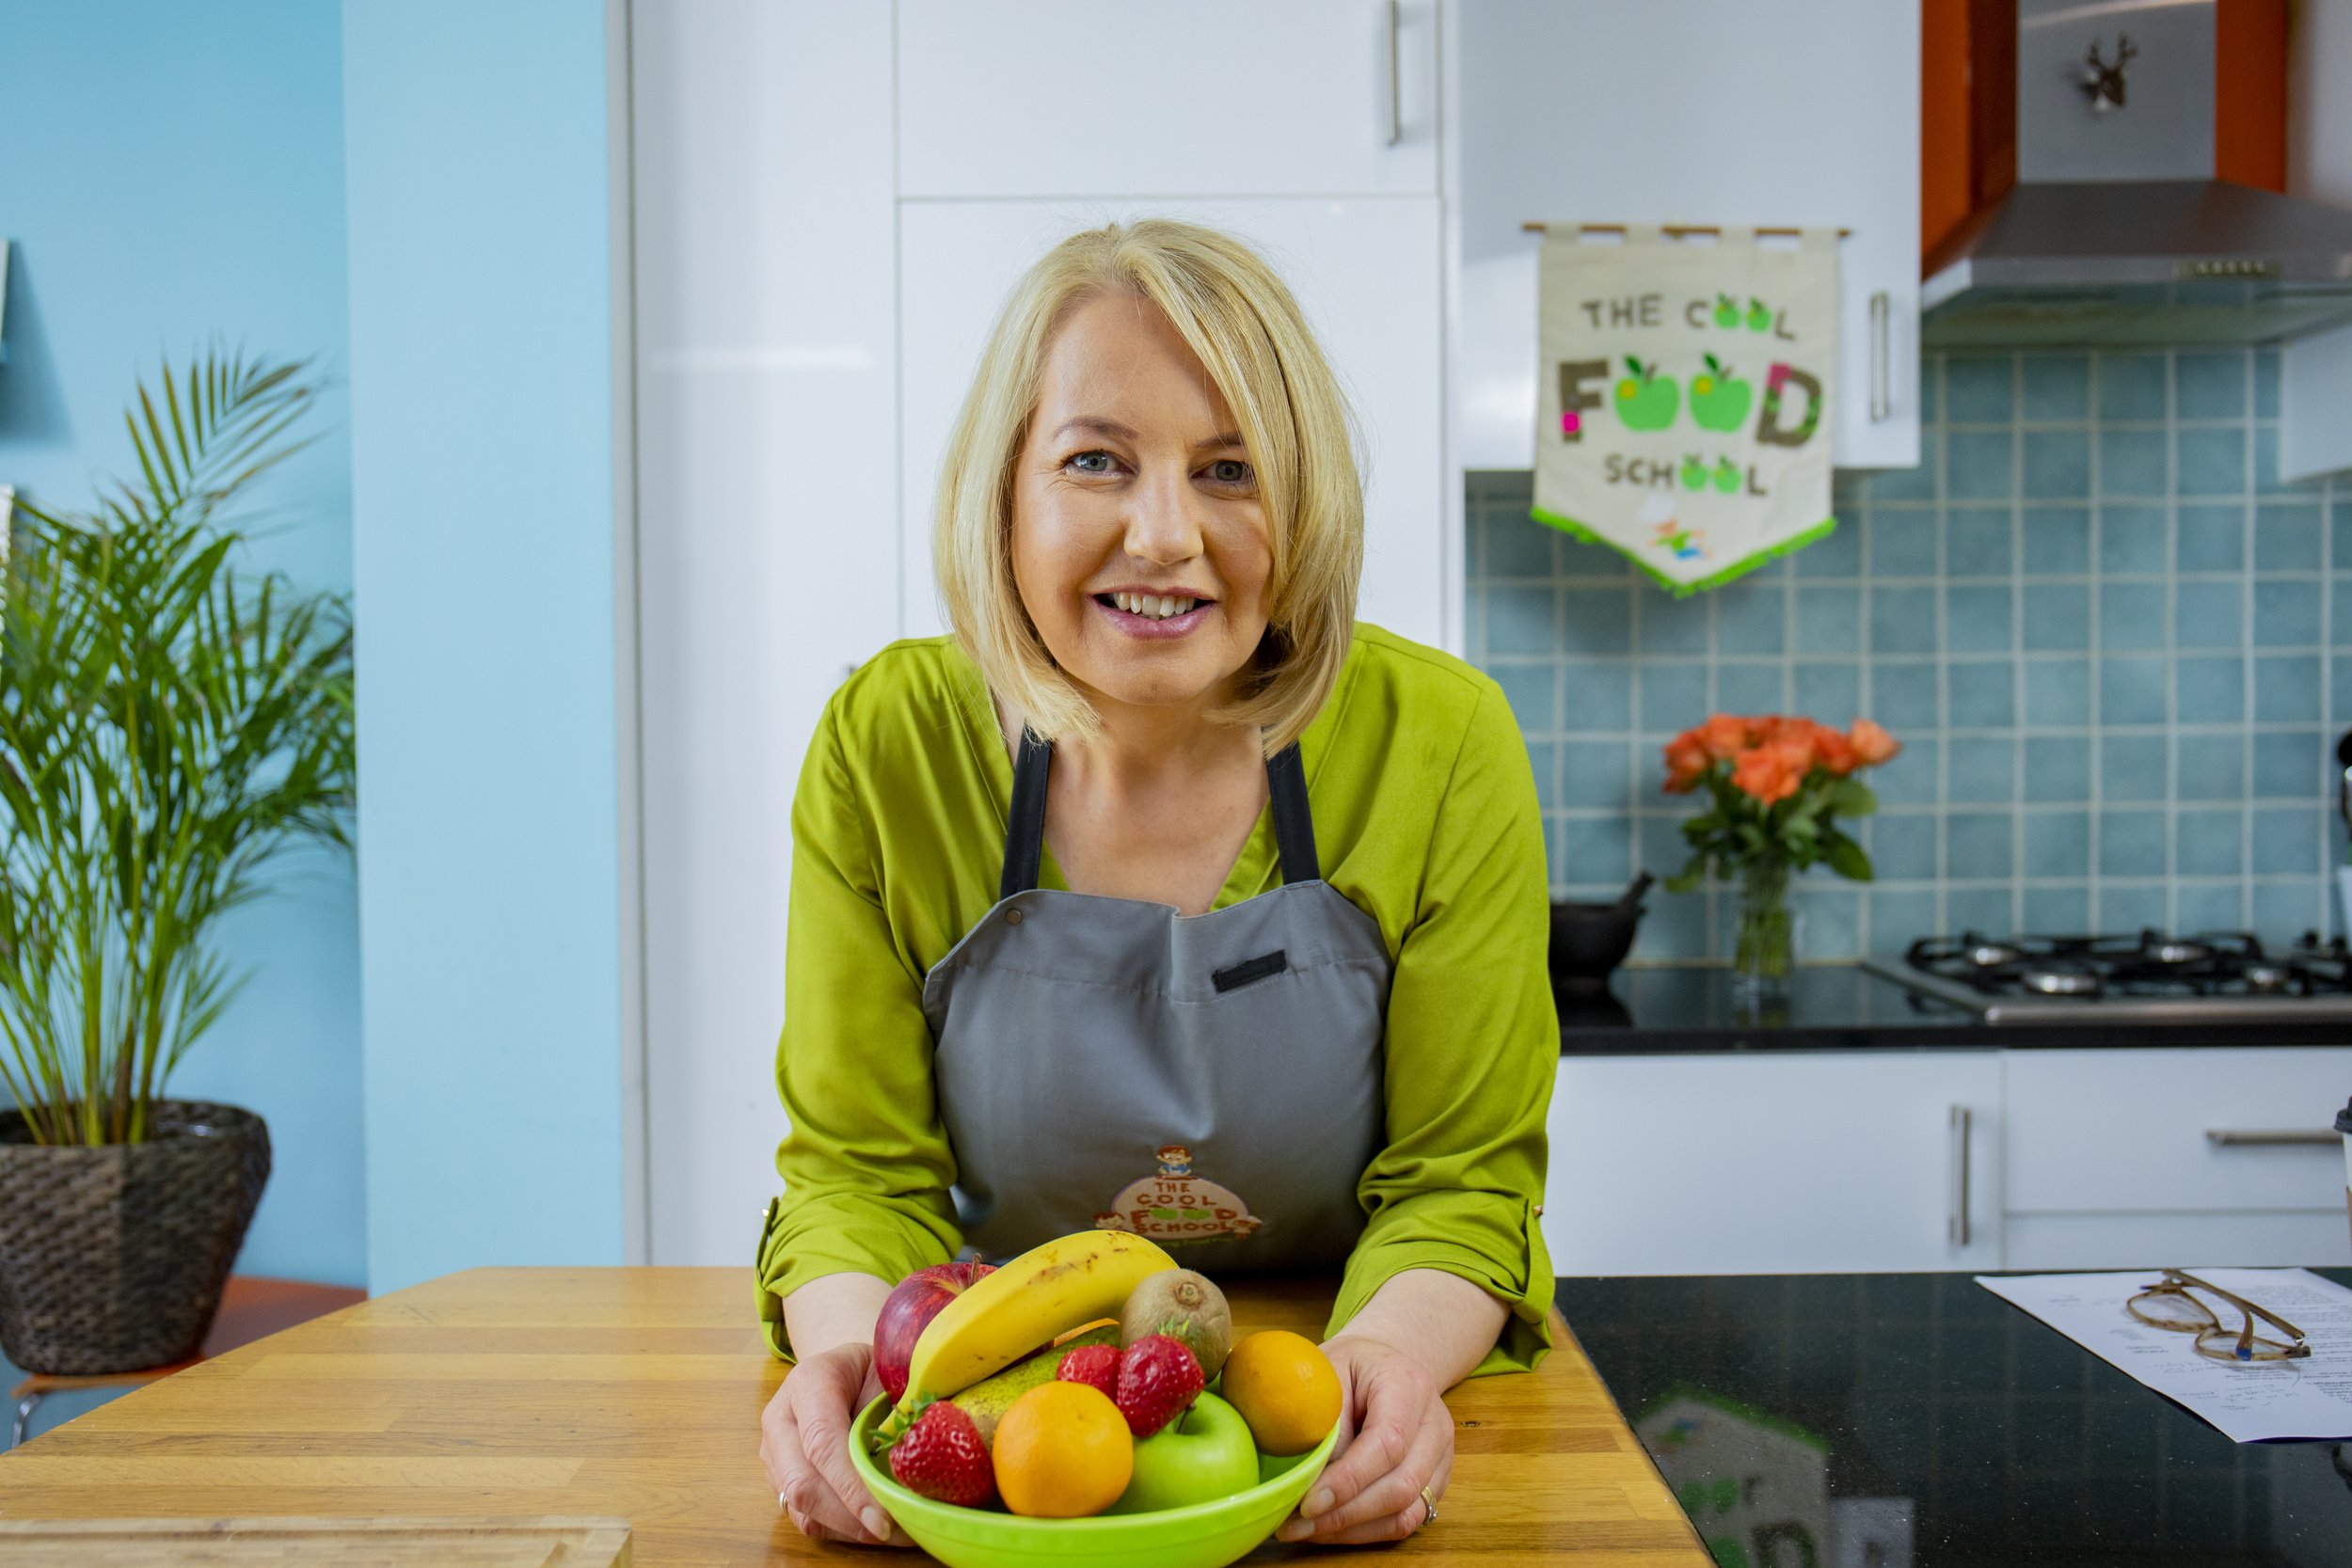 Deirdre Doyle The Cool Food School online programme with fruit bowl.jpg